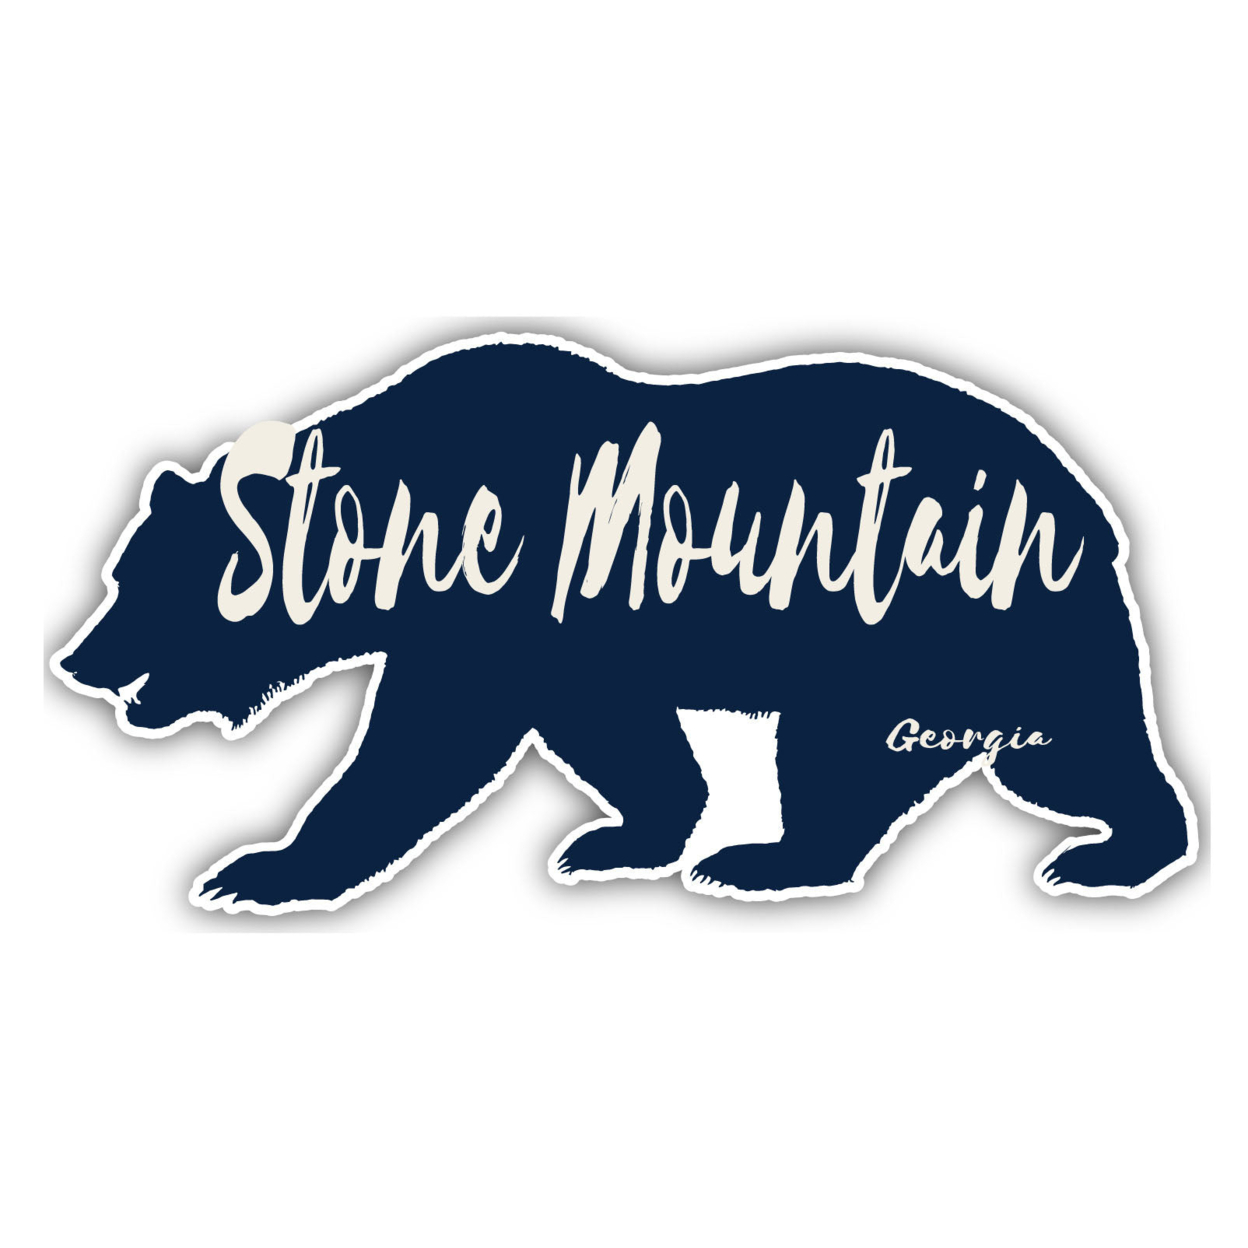 Stone Mountain Georgia Souvenir Decorative Stickers (Choose Theme And Size) - Single Unit, 4-Inch, Tent